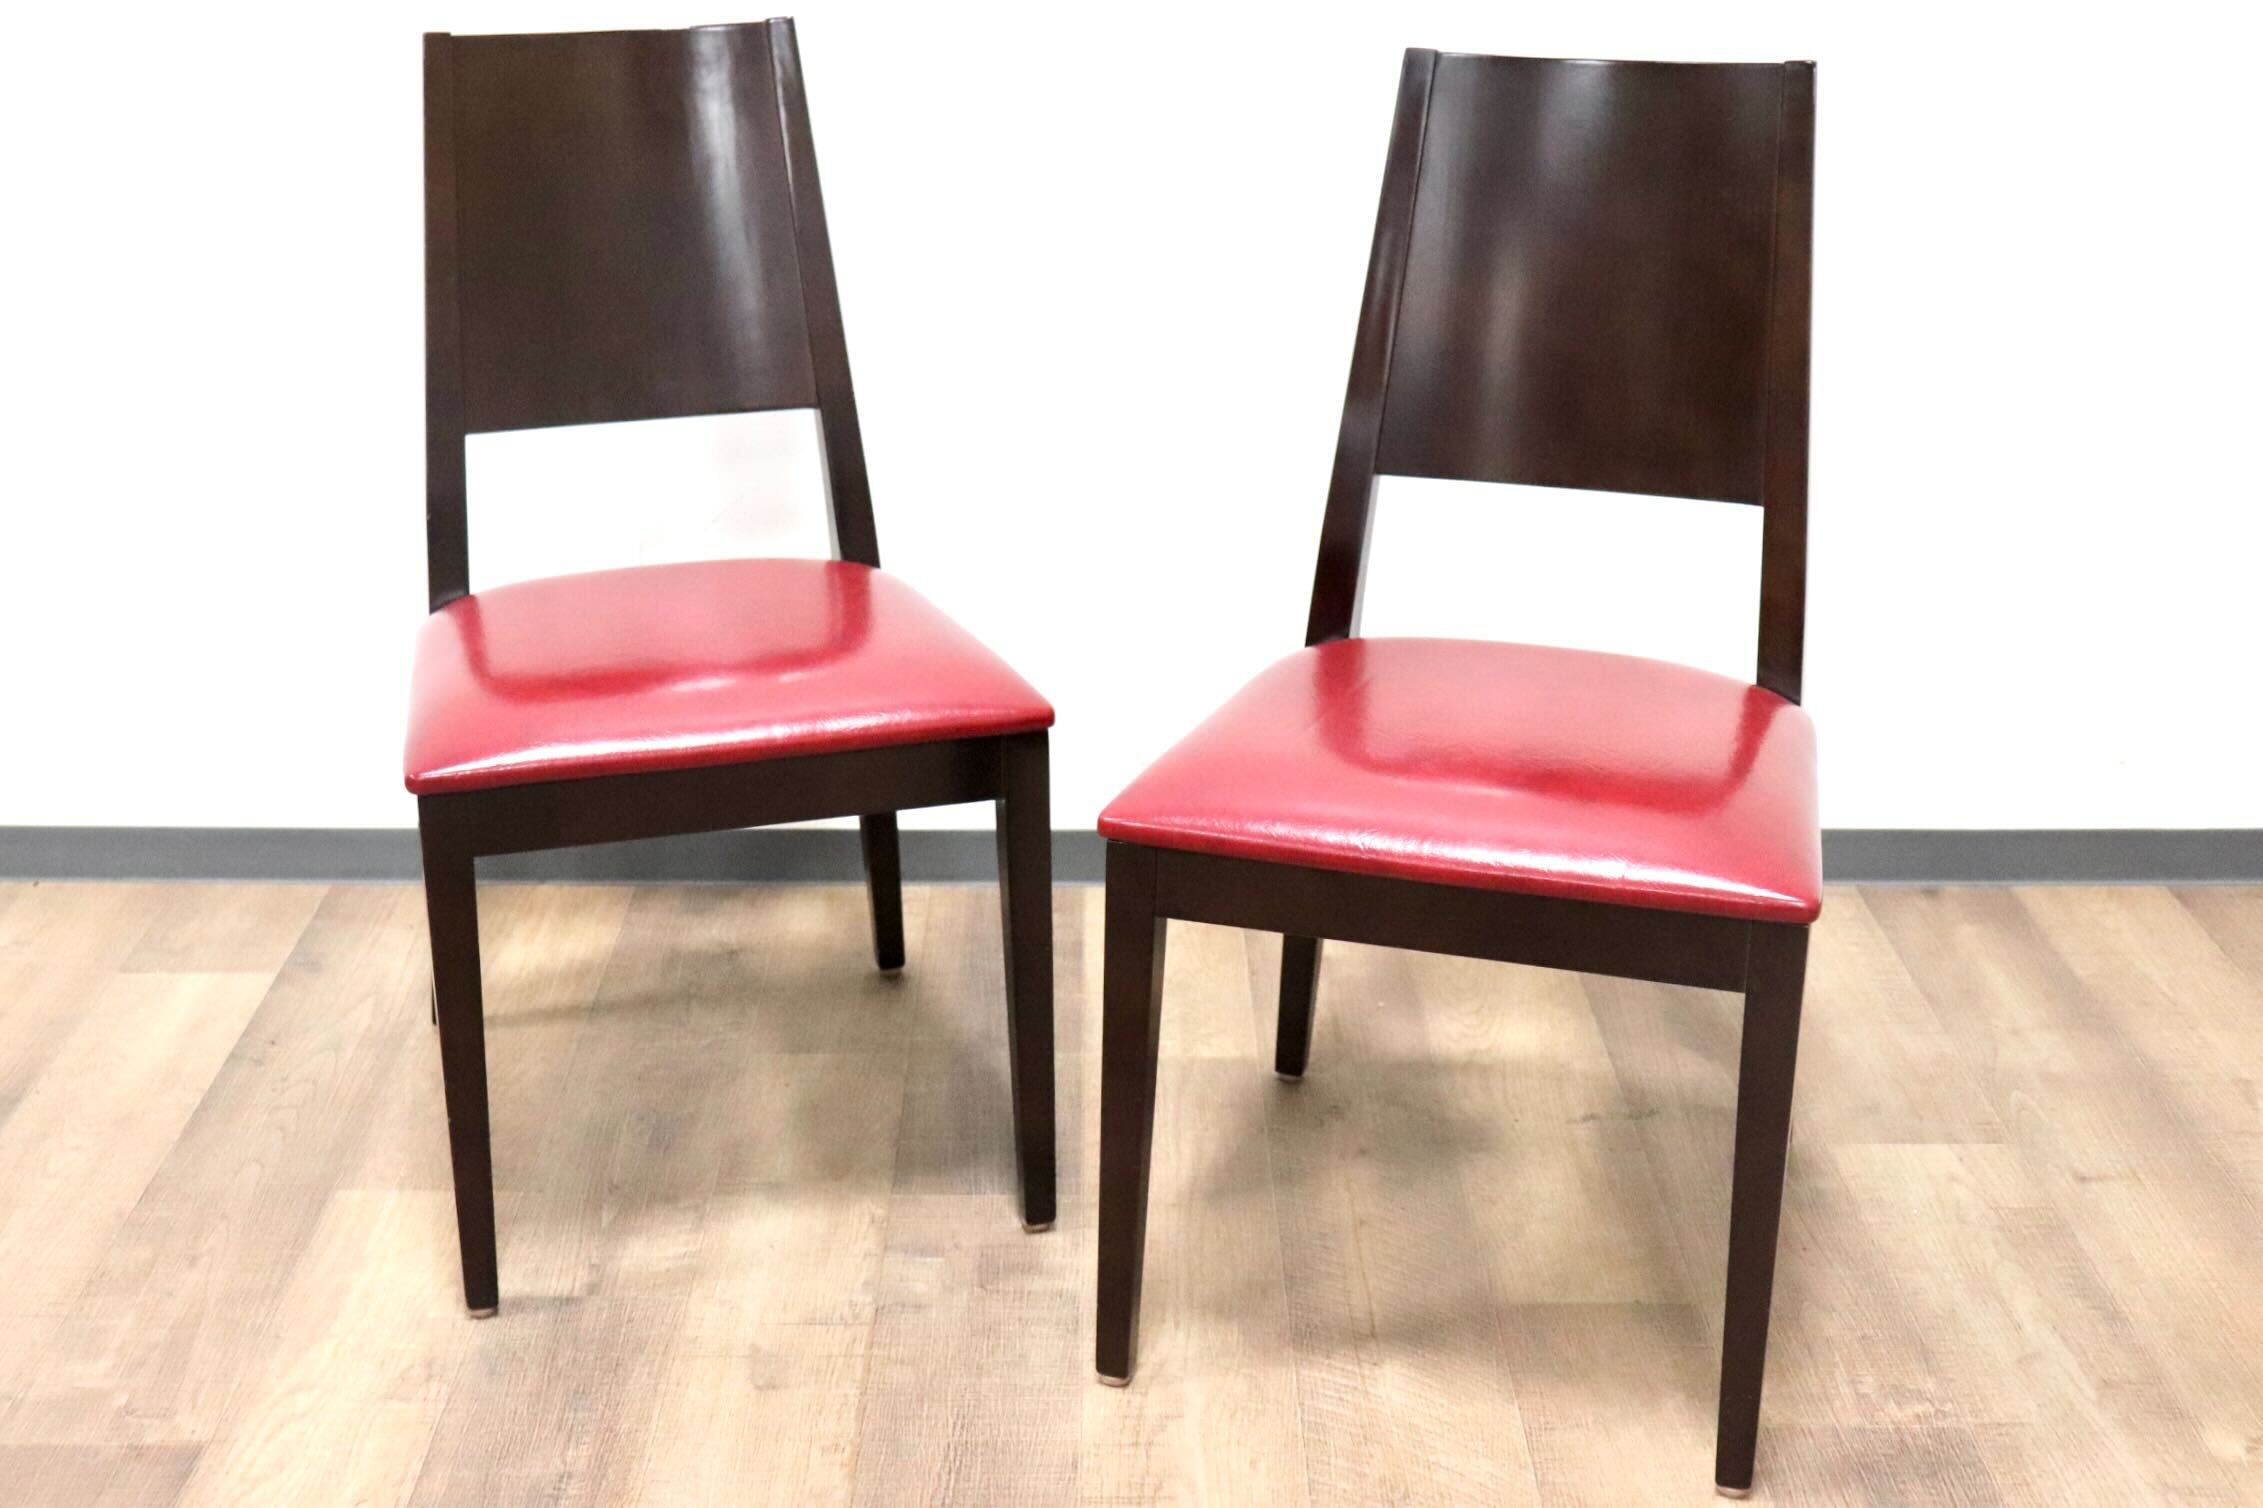 GMHH12C○CRES ダイニングチェア 椅子 2脚セット 食卓椅子 アームレスチェア 木製 合皮 モダン レトロ 店舗 カフェ 喫茶